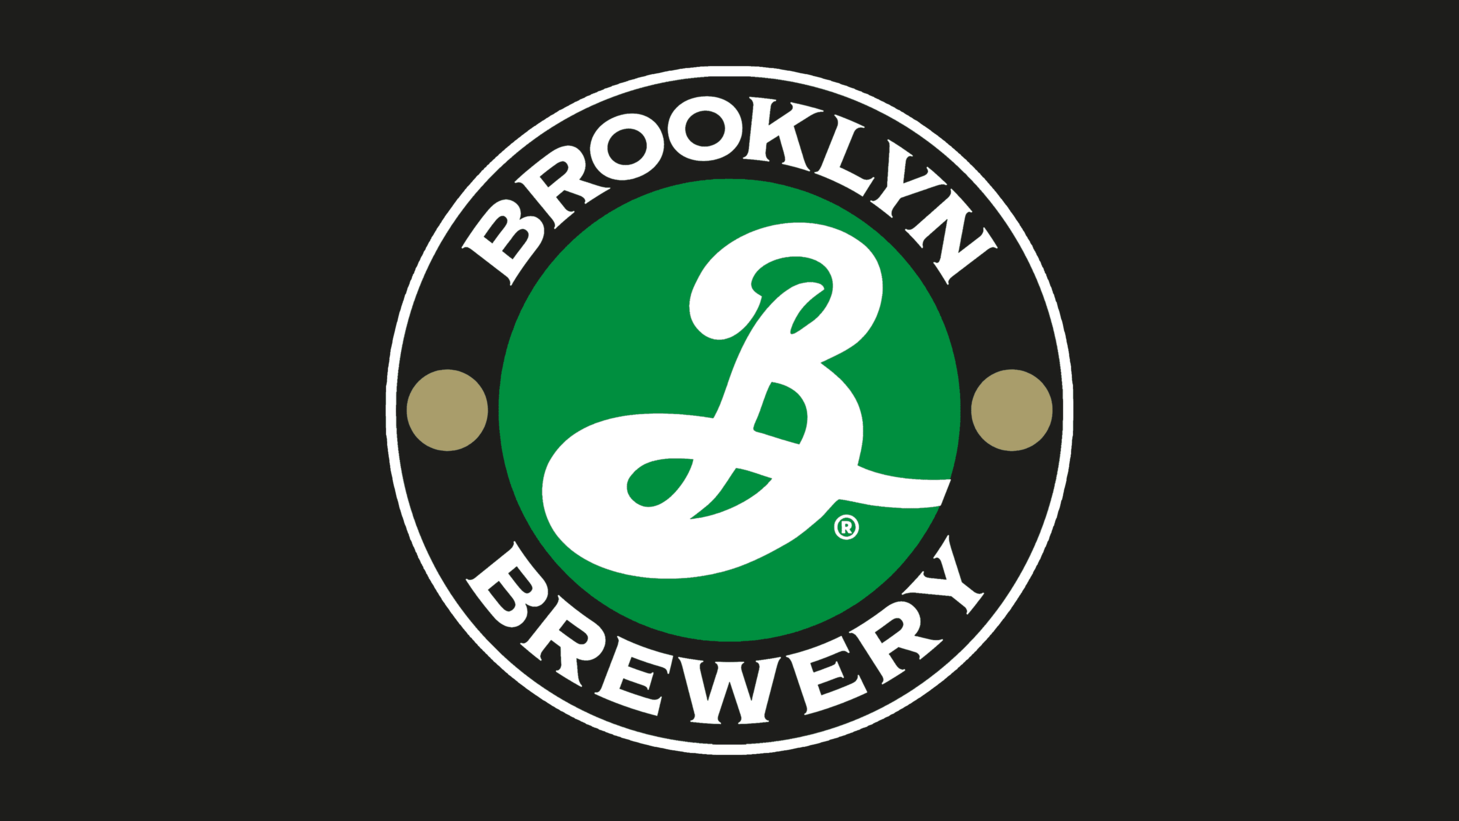 Brooklyn brewery new sign